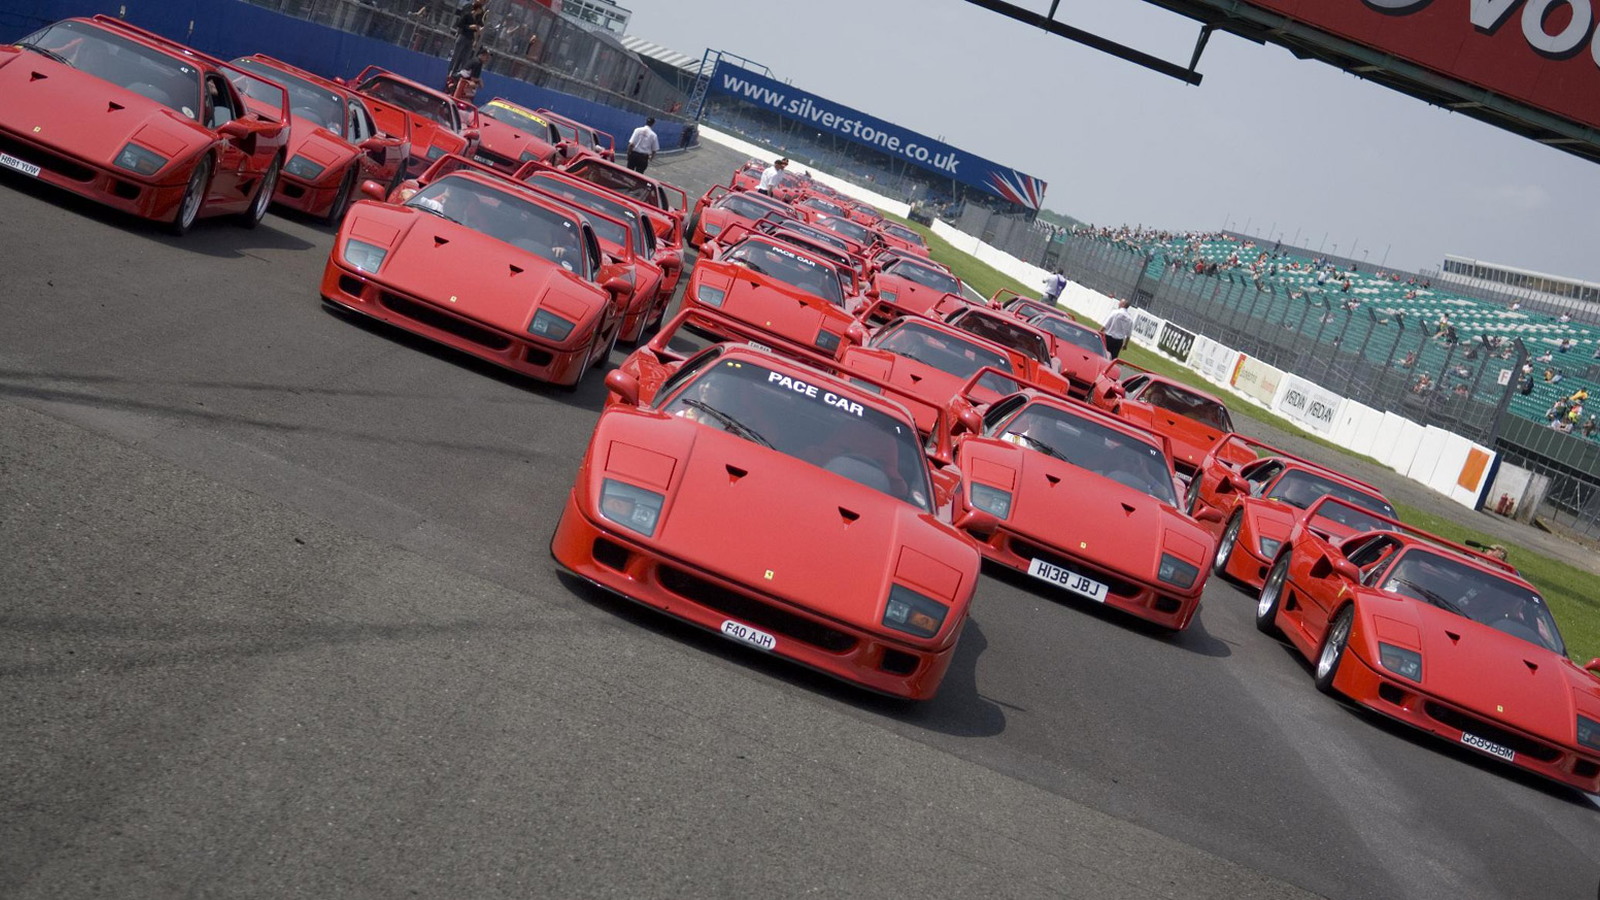 40 Ferrari F40s celebrate the car’s 20th birthday in 2007